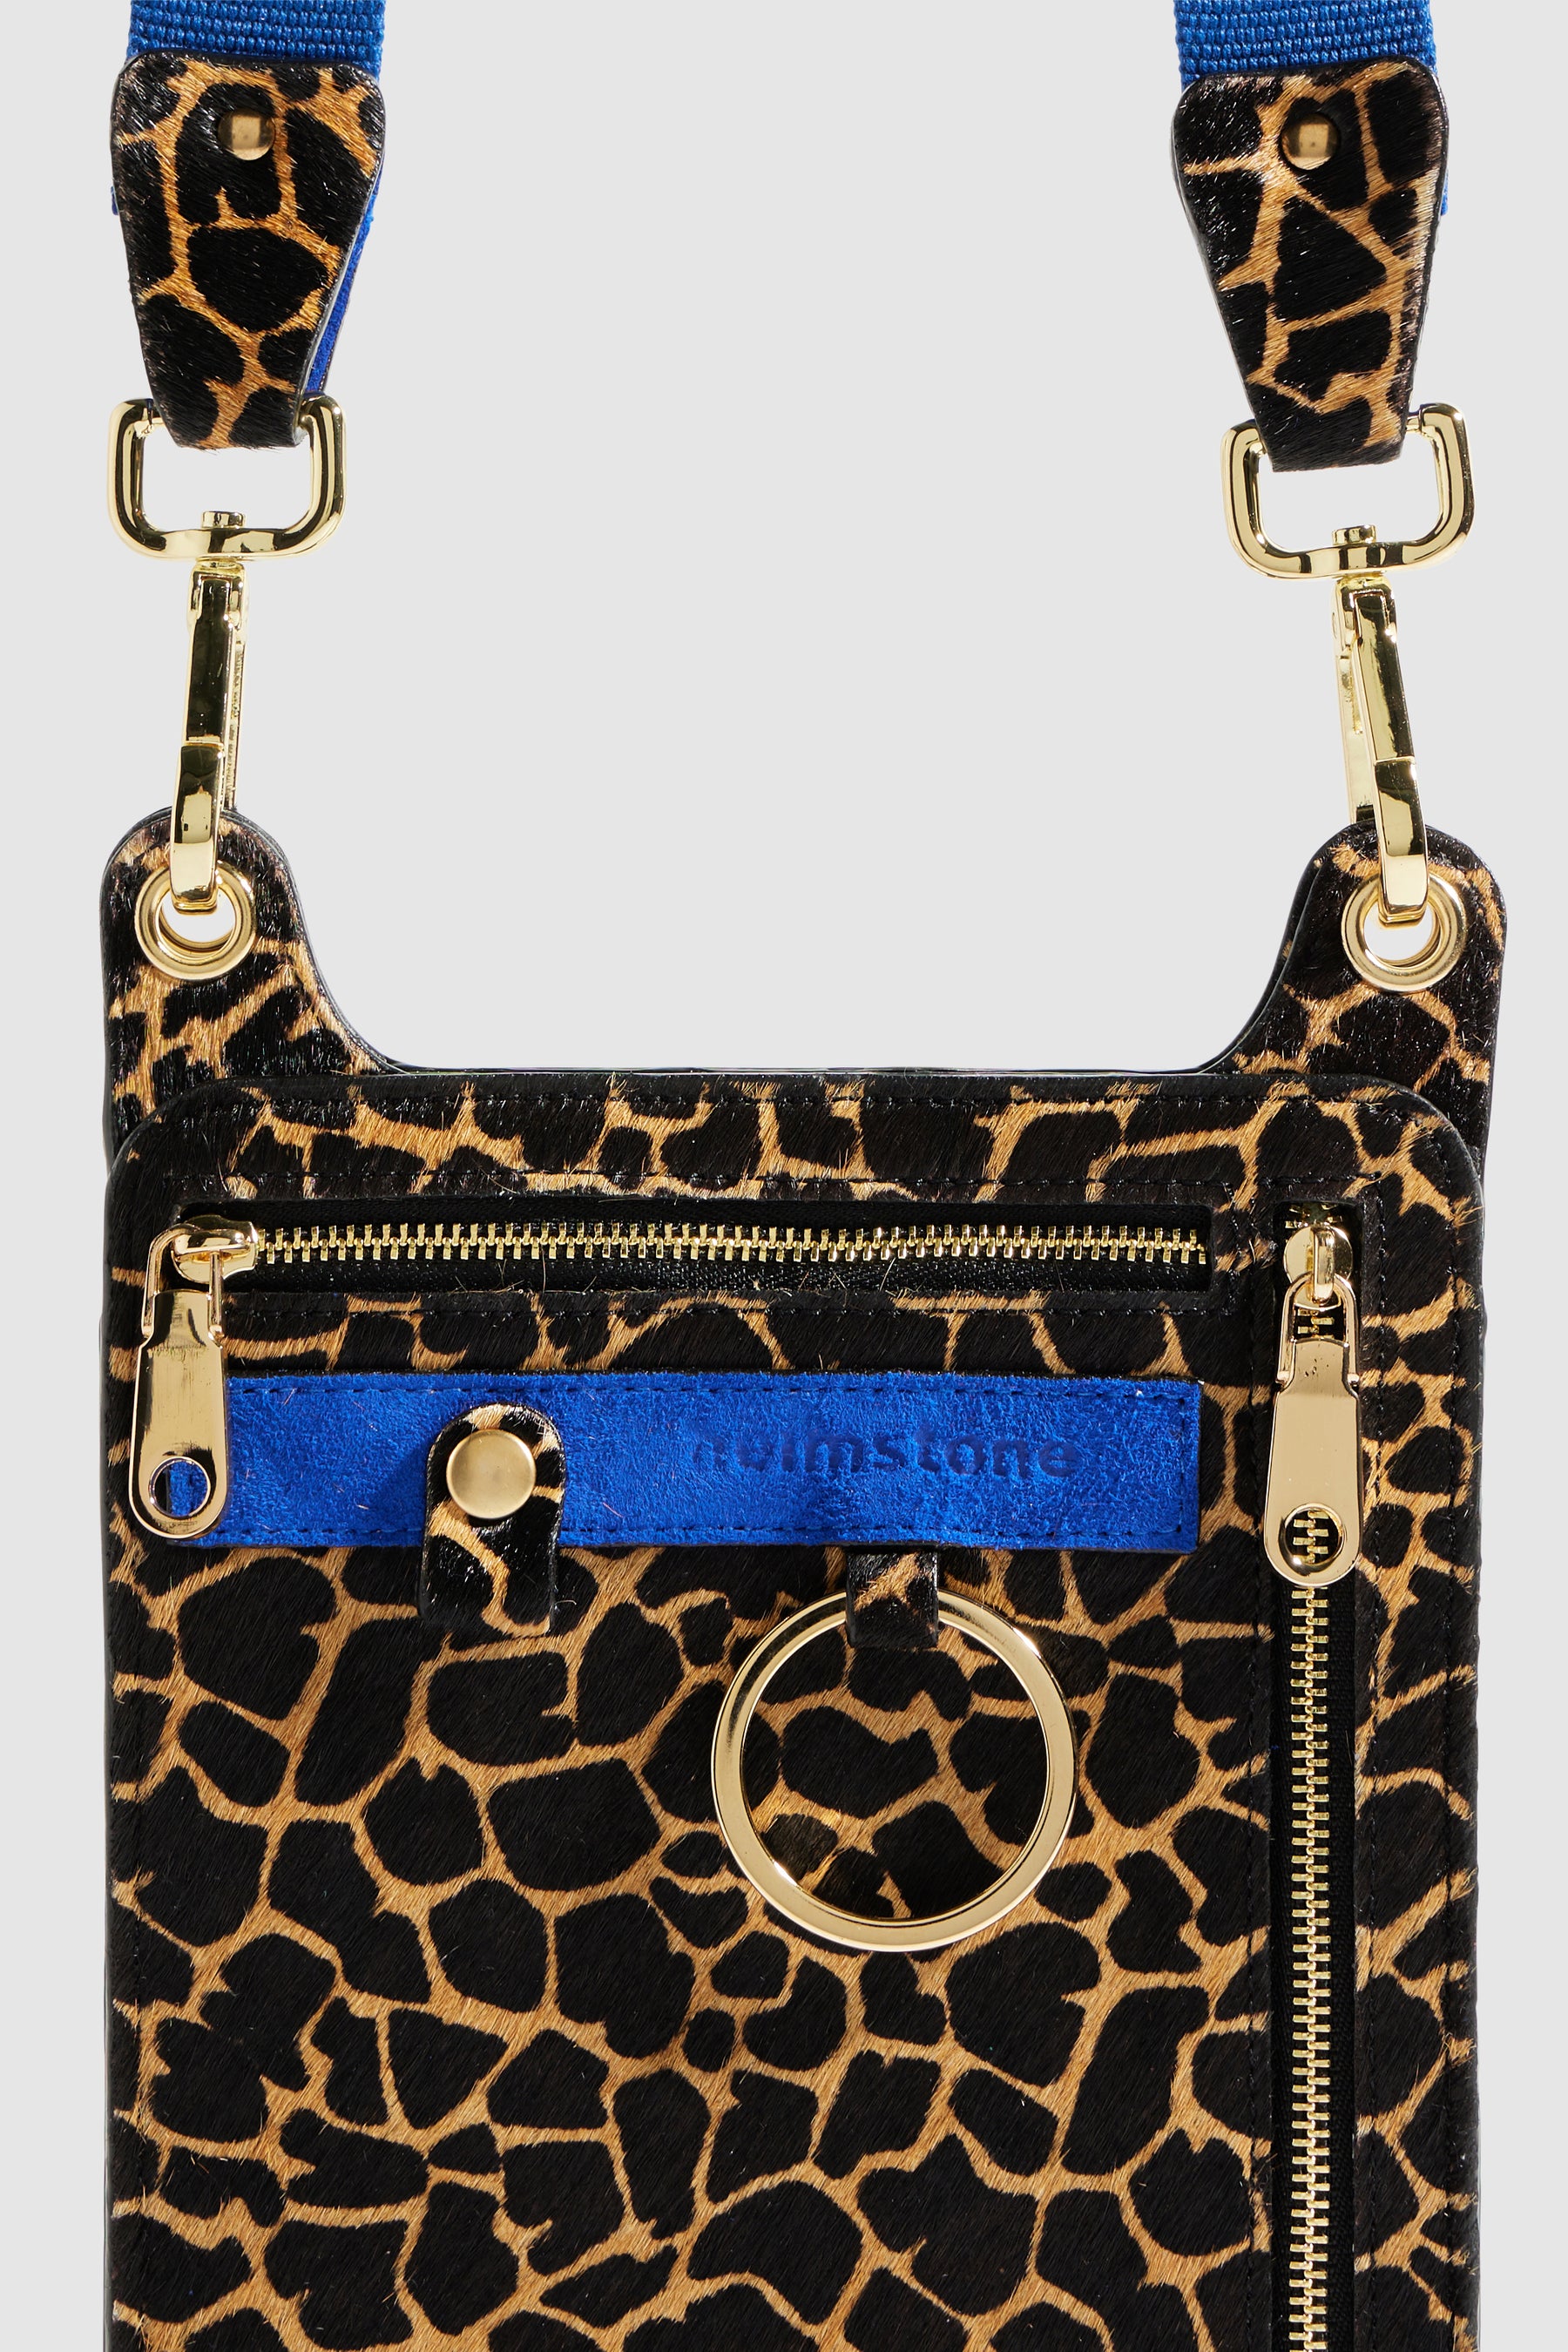 Stanley satchel in Giraffe printed leather